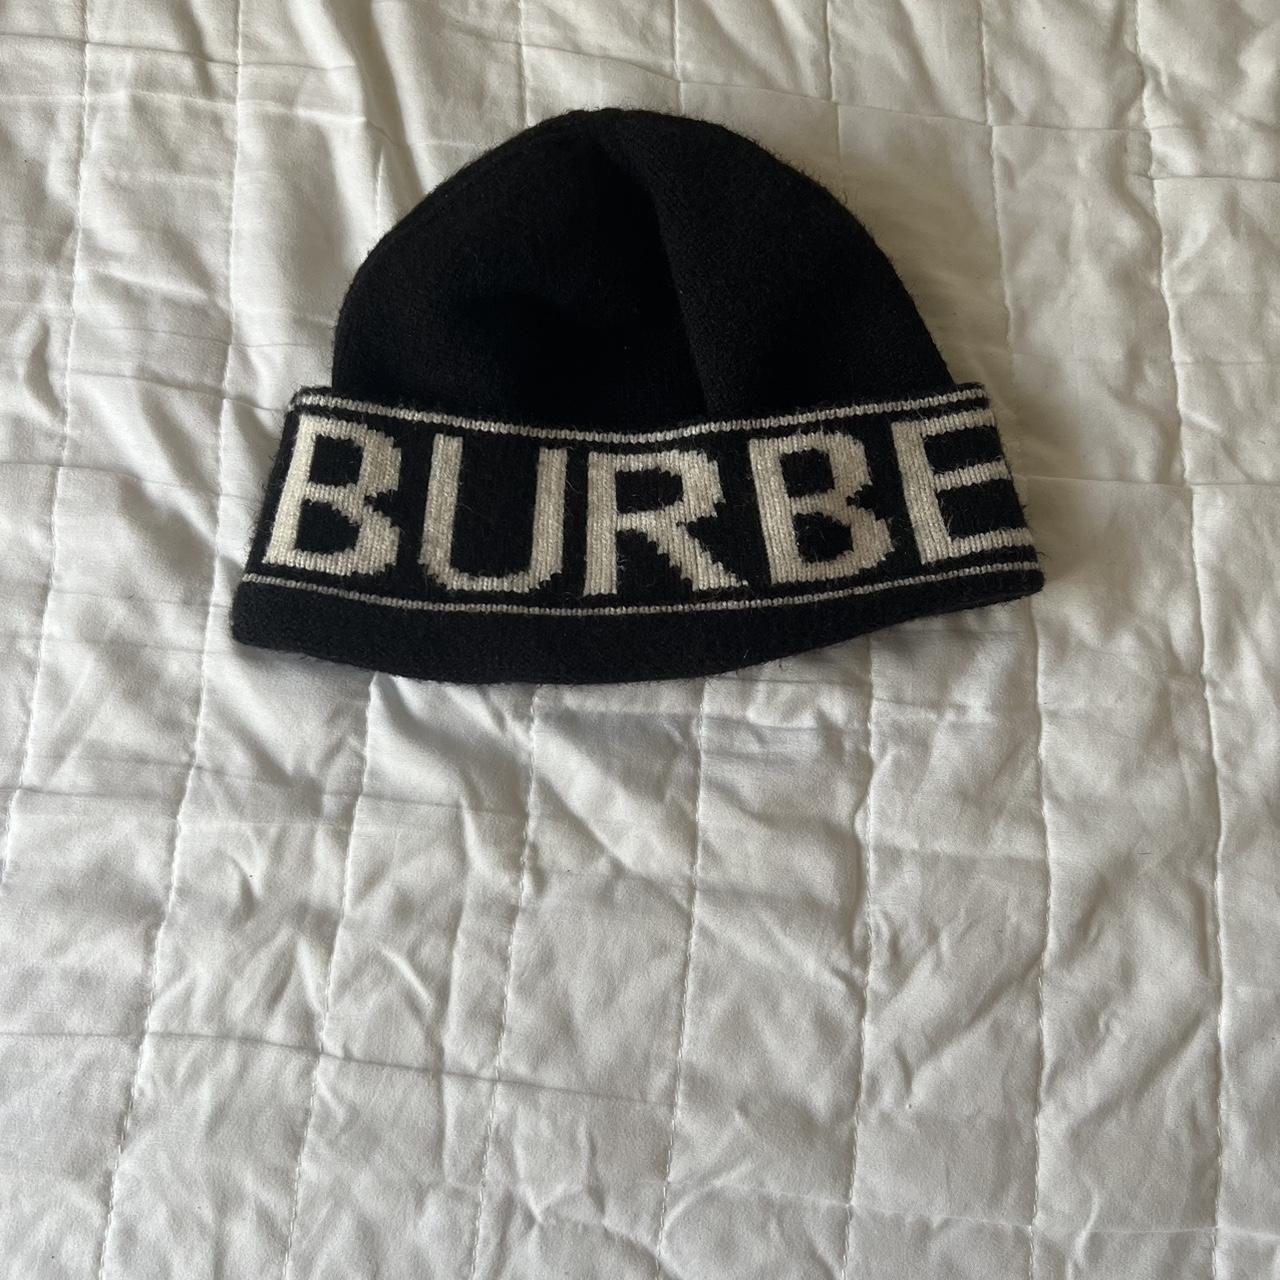 Burberry beanie Burberry hat Black No box Going... - Depop